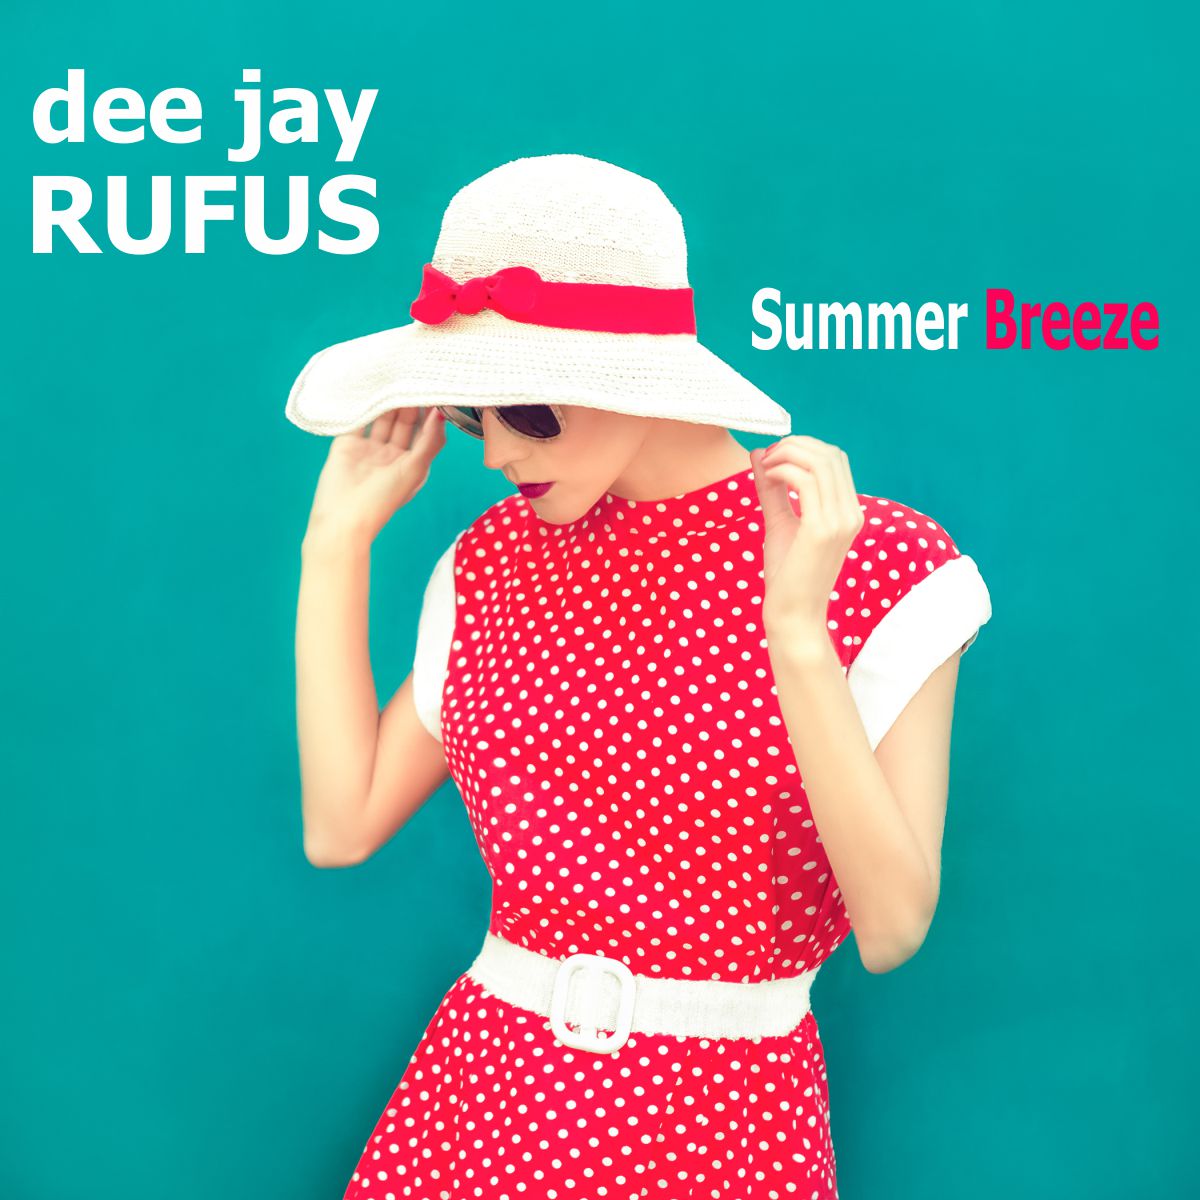 Dee Jay Rufus - Summer breeze Cover.jpg